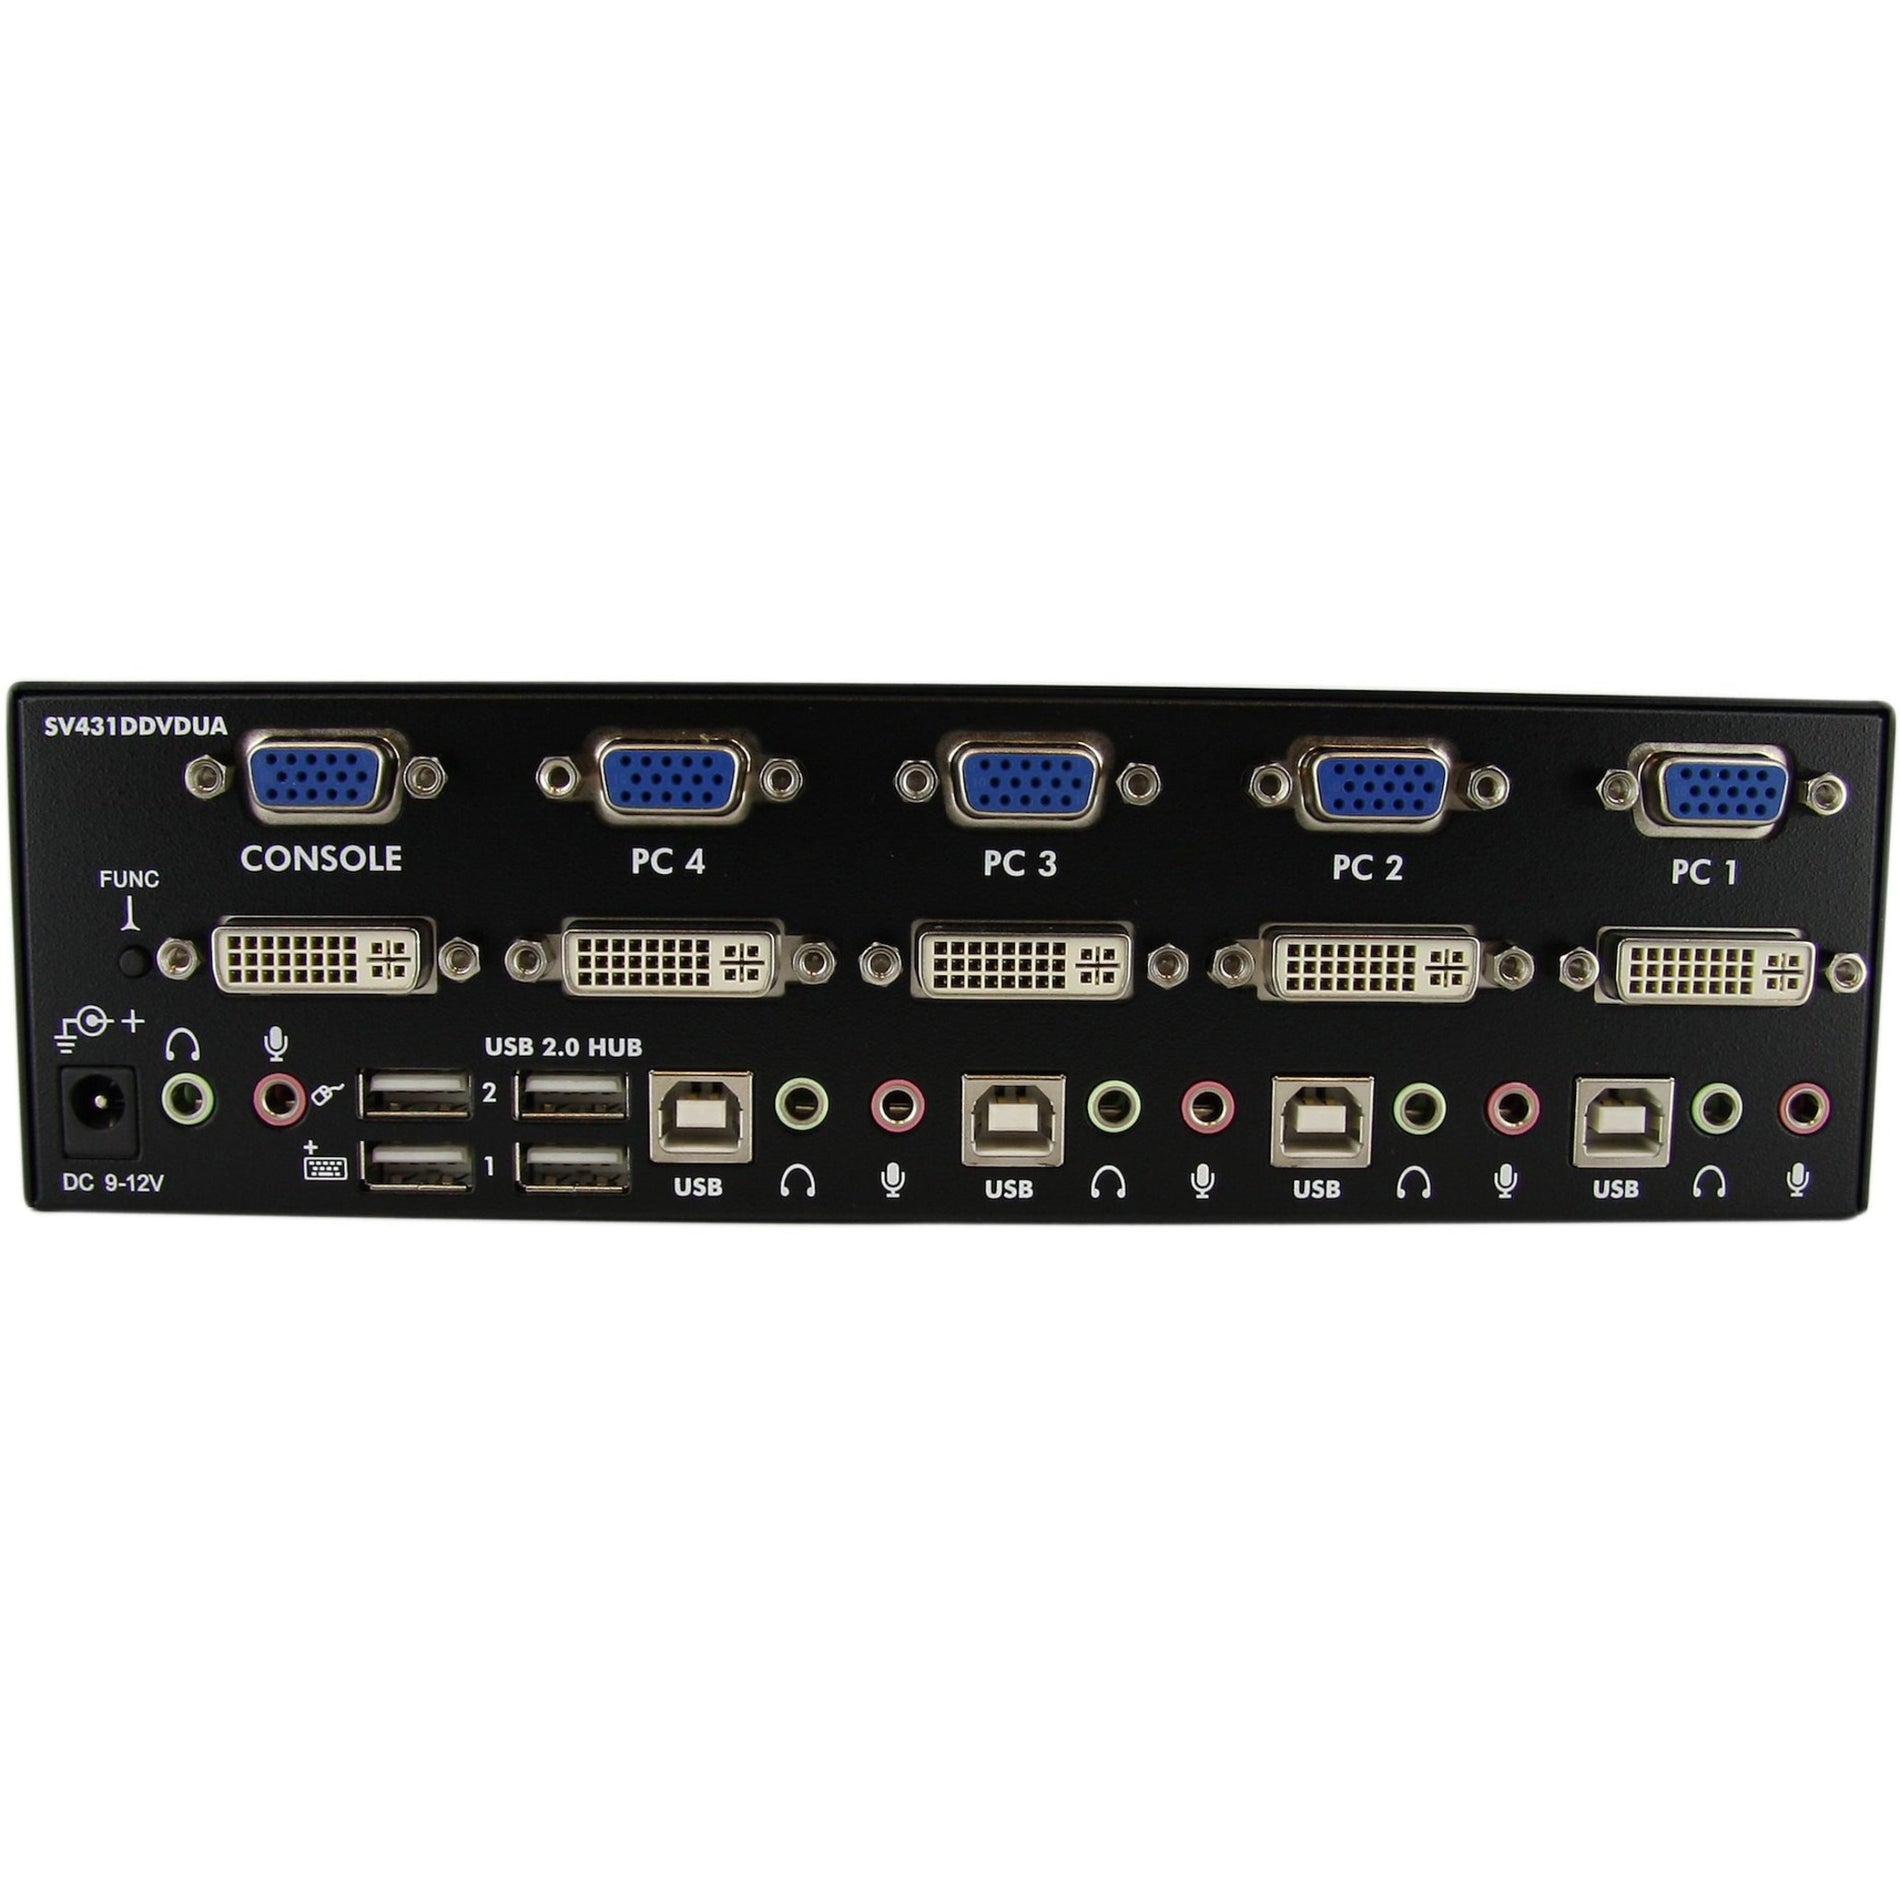 StarTech.com SV431DDVDUA 4-Port DVI and VGA, USB KVM Switch with Audio and USB 2.0 Hub, Dual Monitor Support